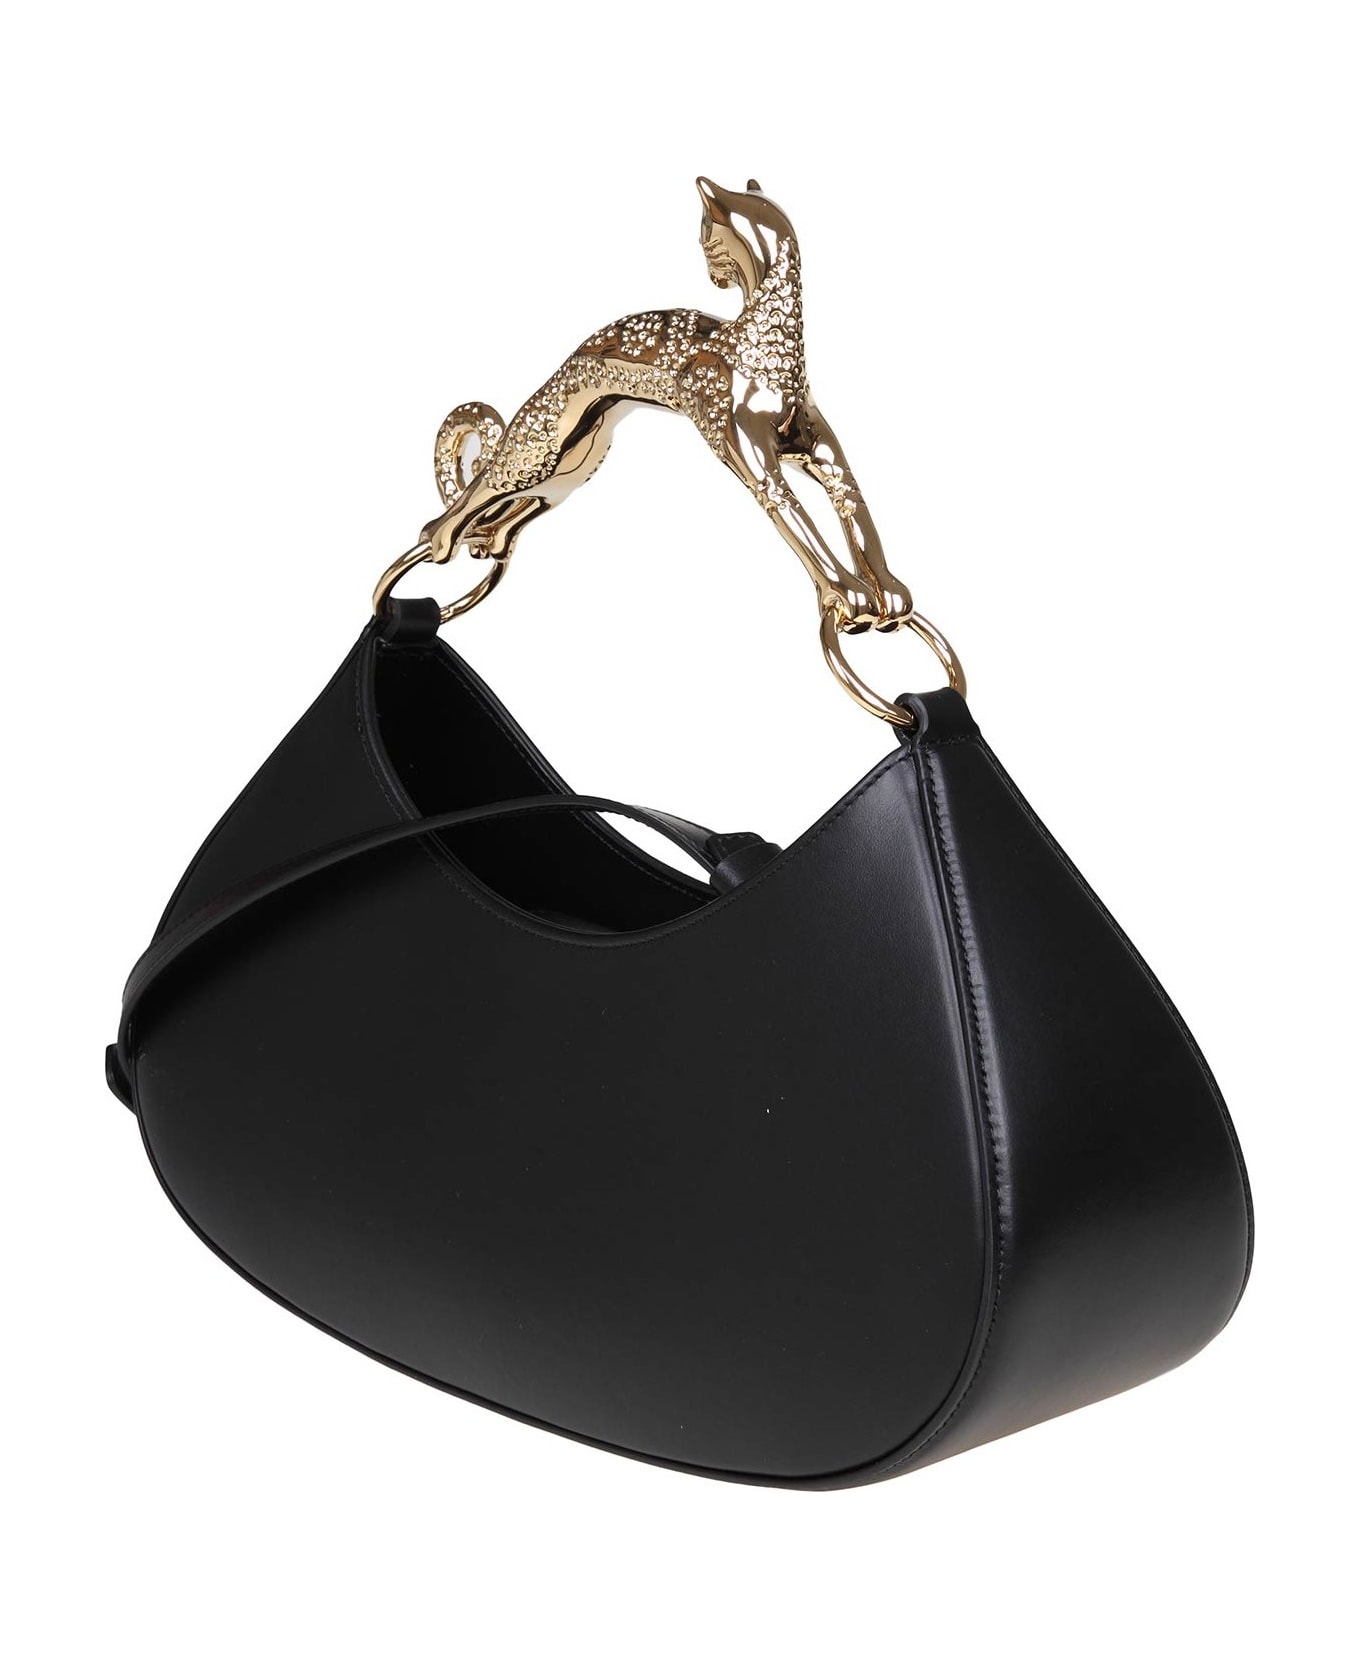 Lanvin Hobo Cat Bag In Black Leather - Black トートバッグ